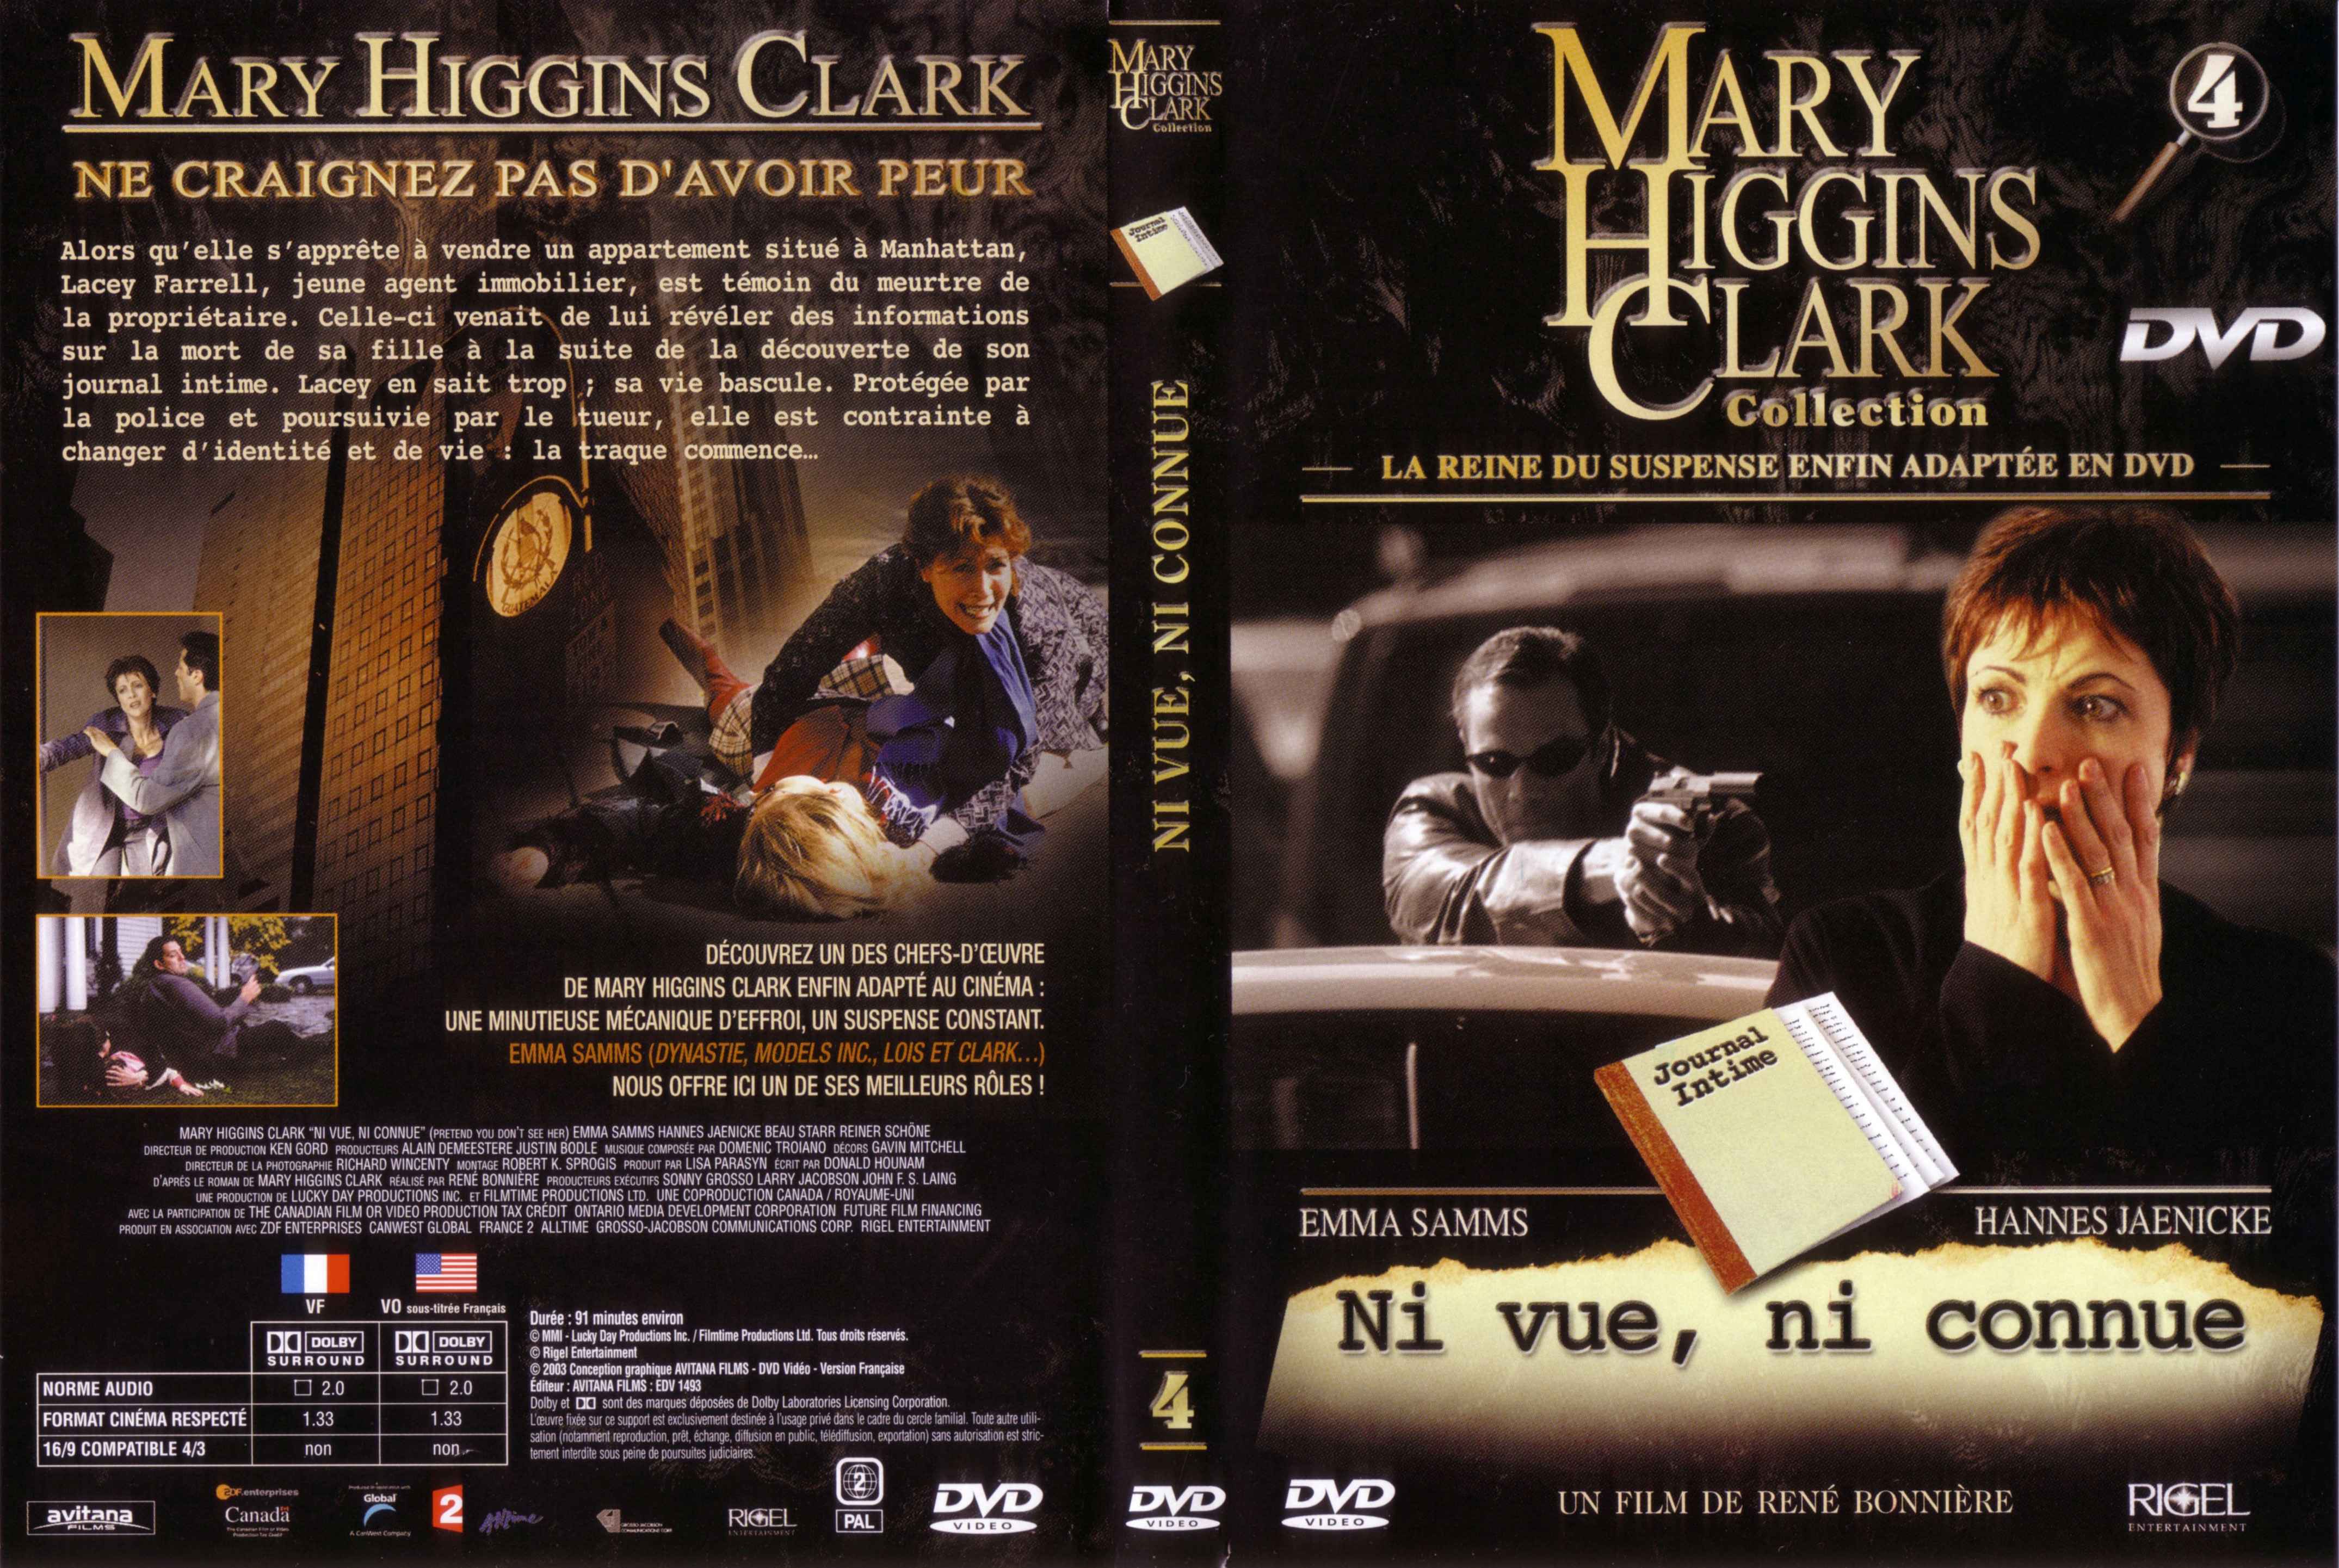 Jaquette DVD de Mary Higgins Clark vol 04 - Ni vue ni connue - Cinéma Passion